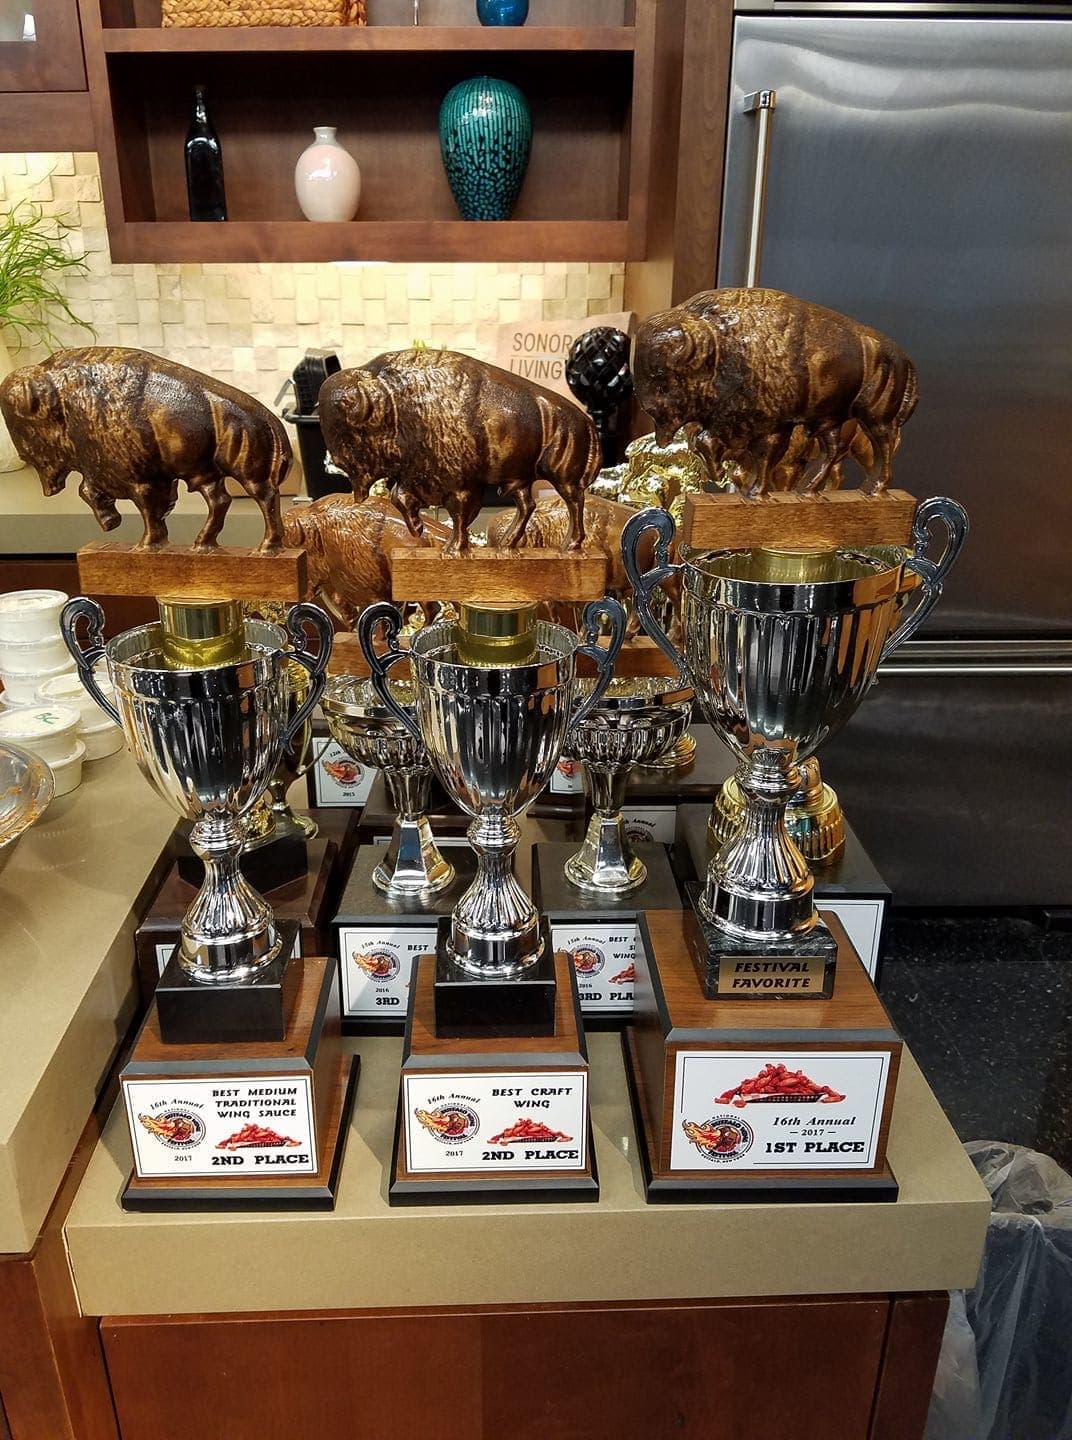 Medium Chicken Wing Trophy